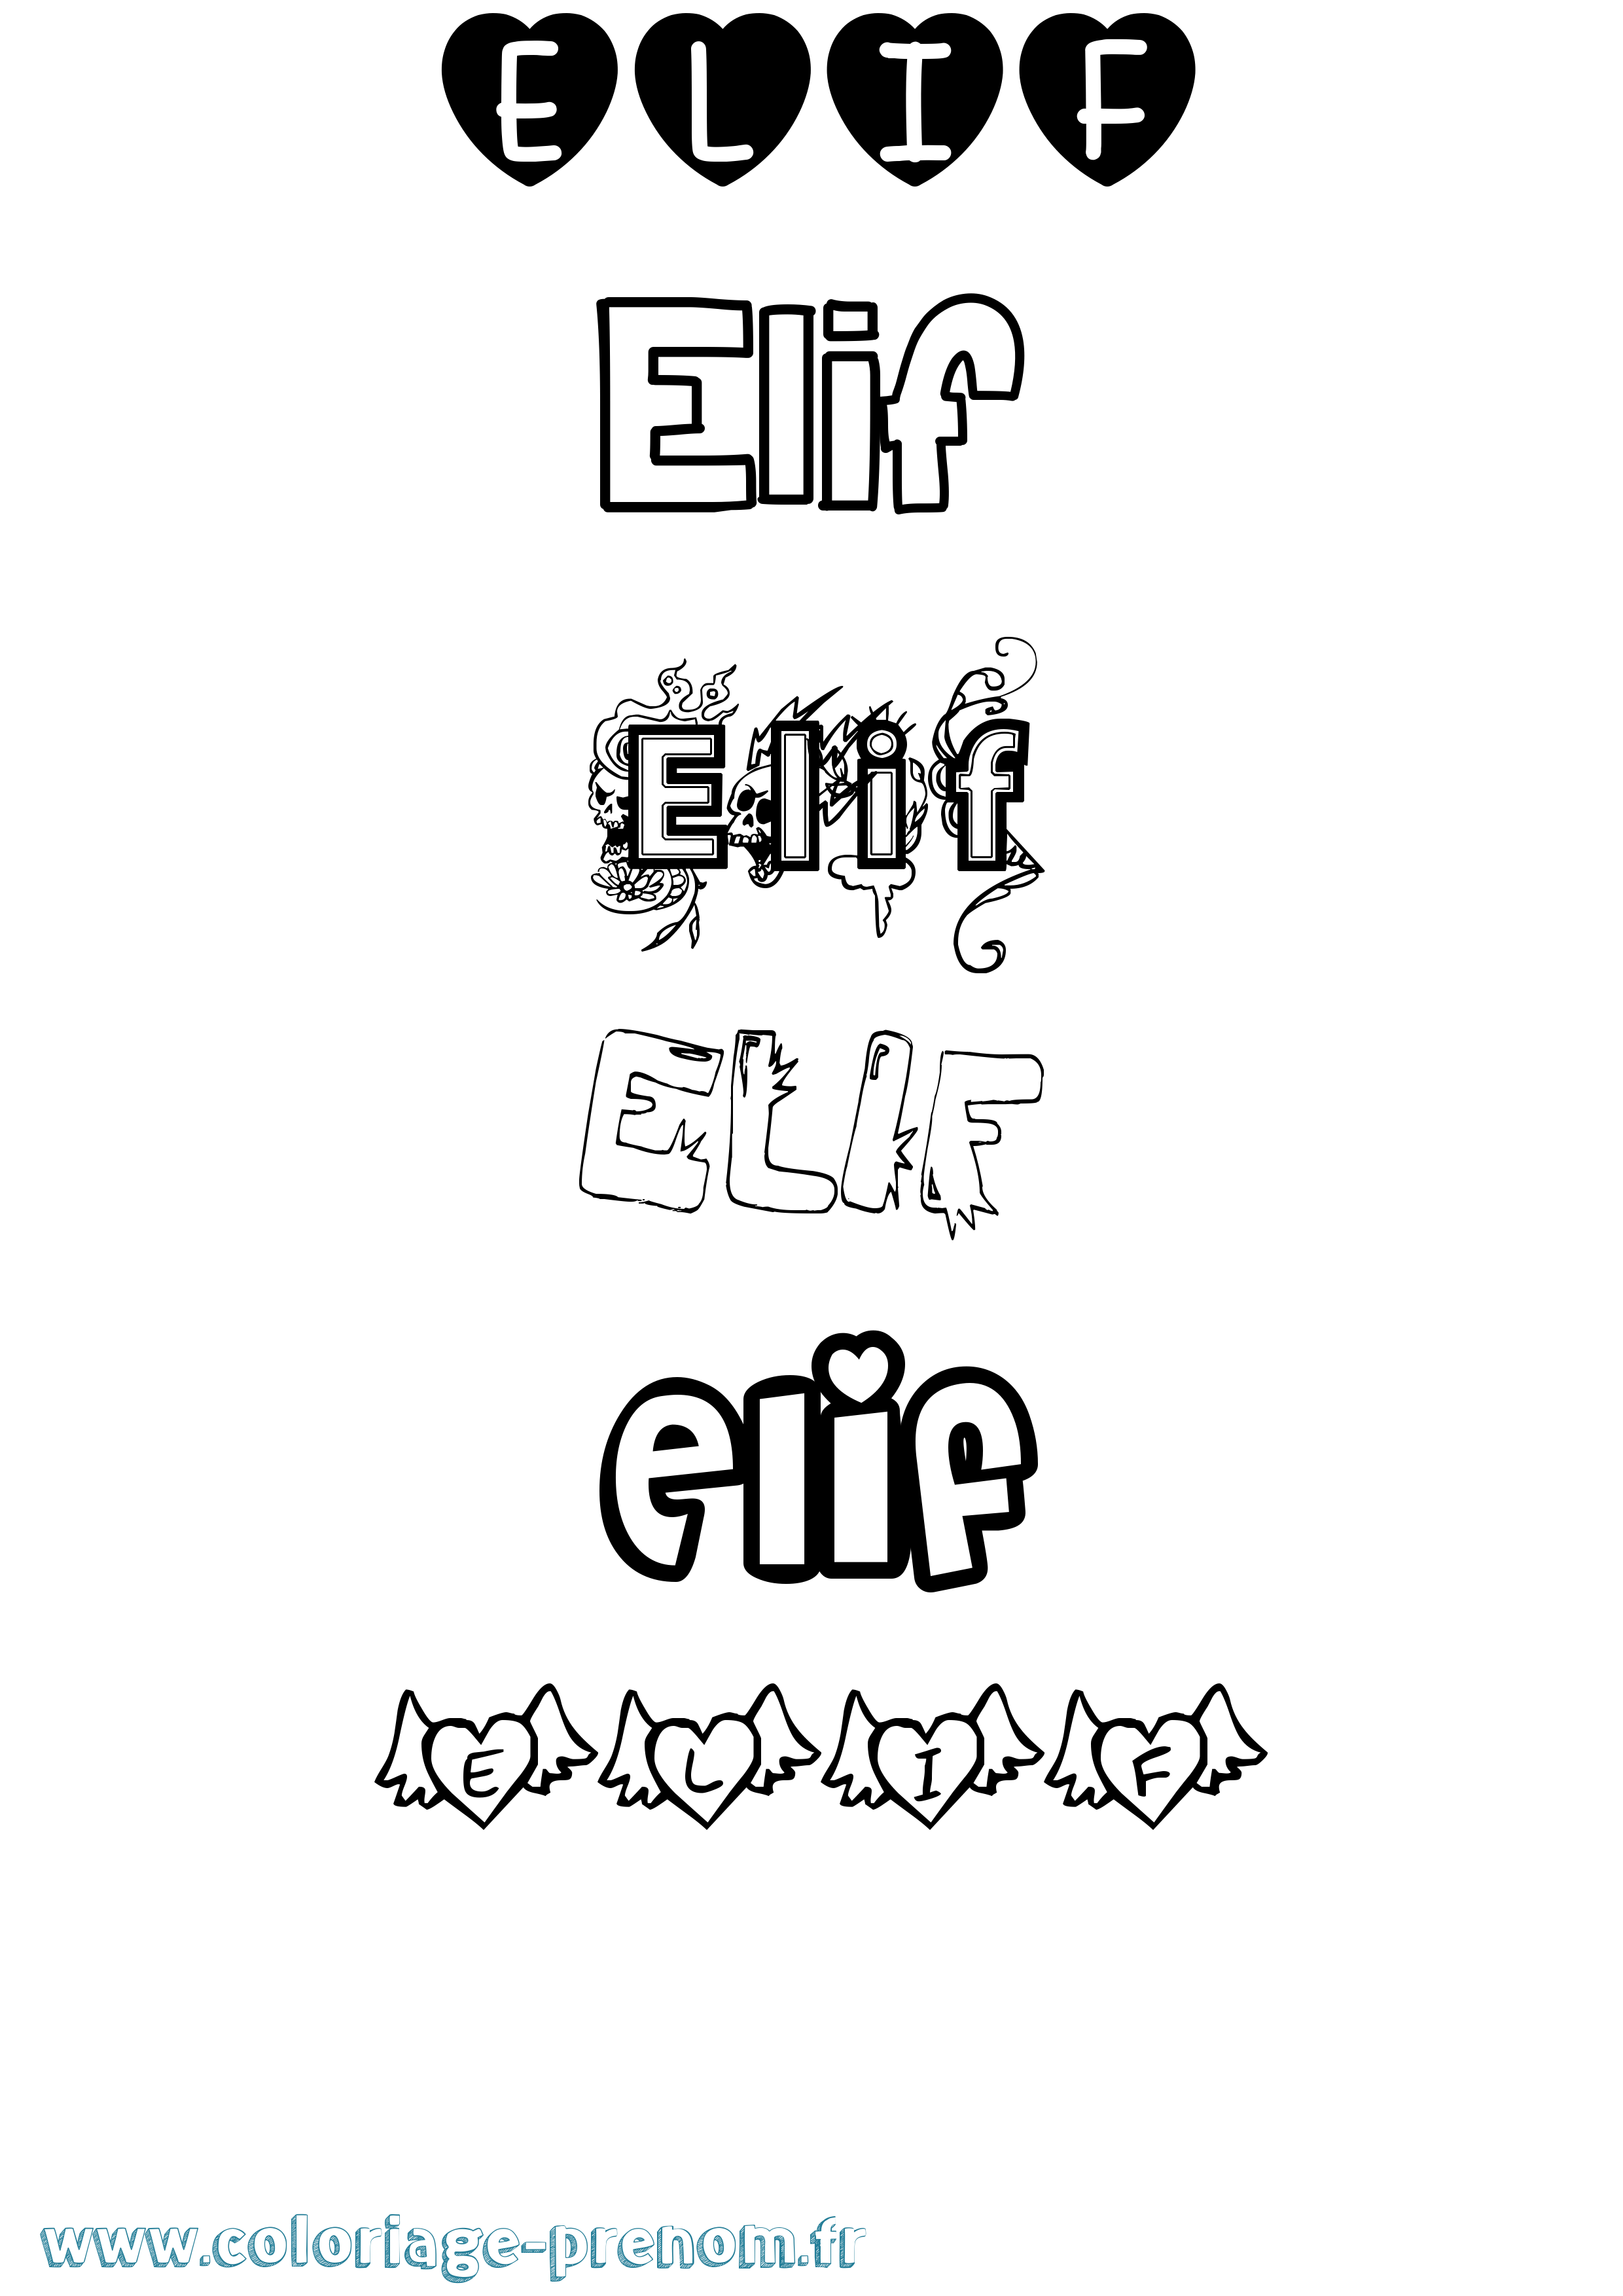 Coloriage prénom Elif